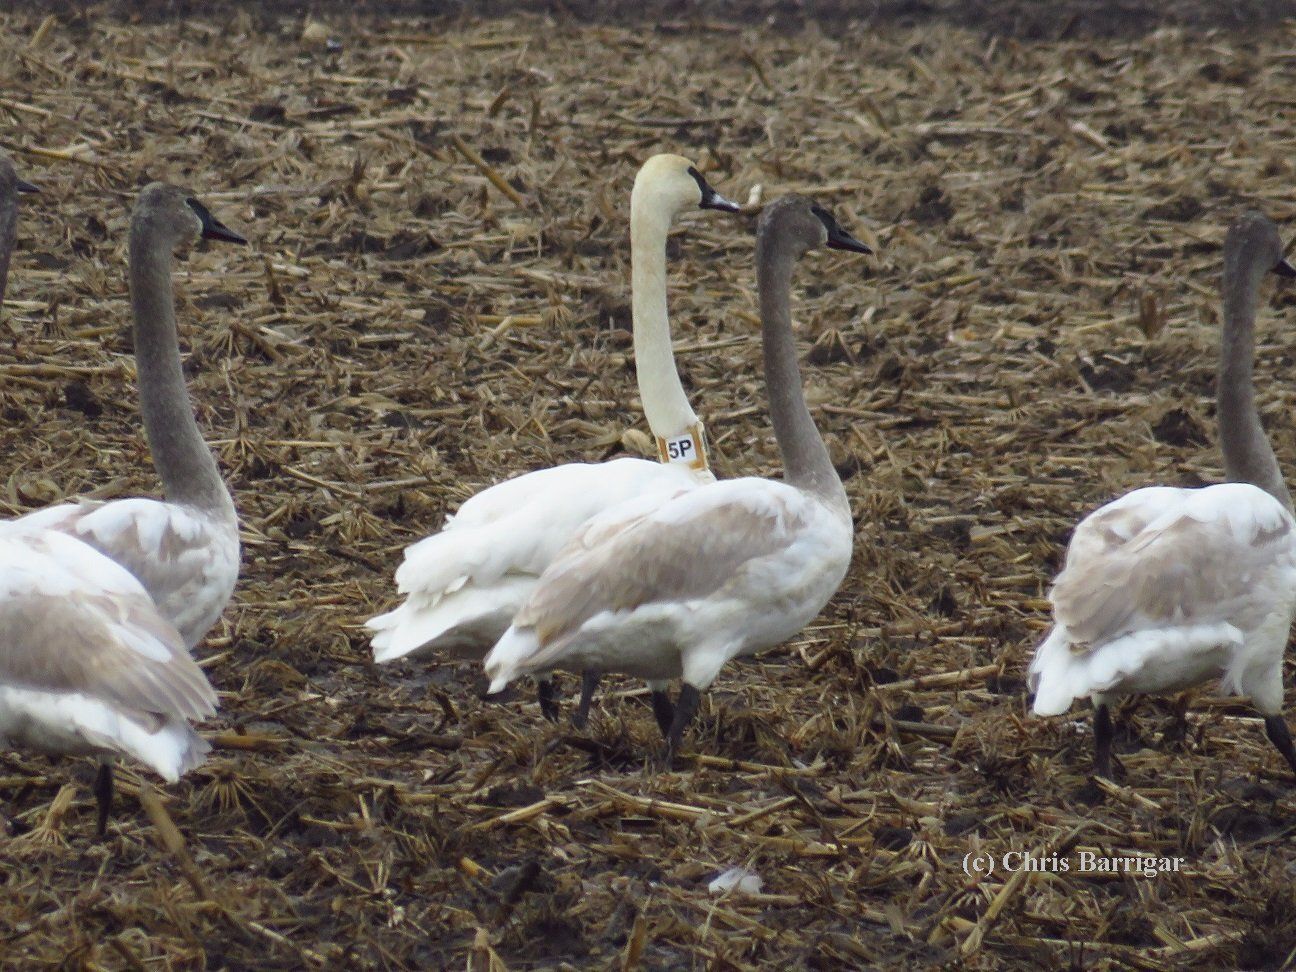 Wisconsin swan 5P spends the winter near St. Louis, Missouri